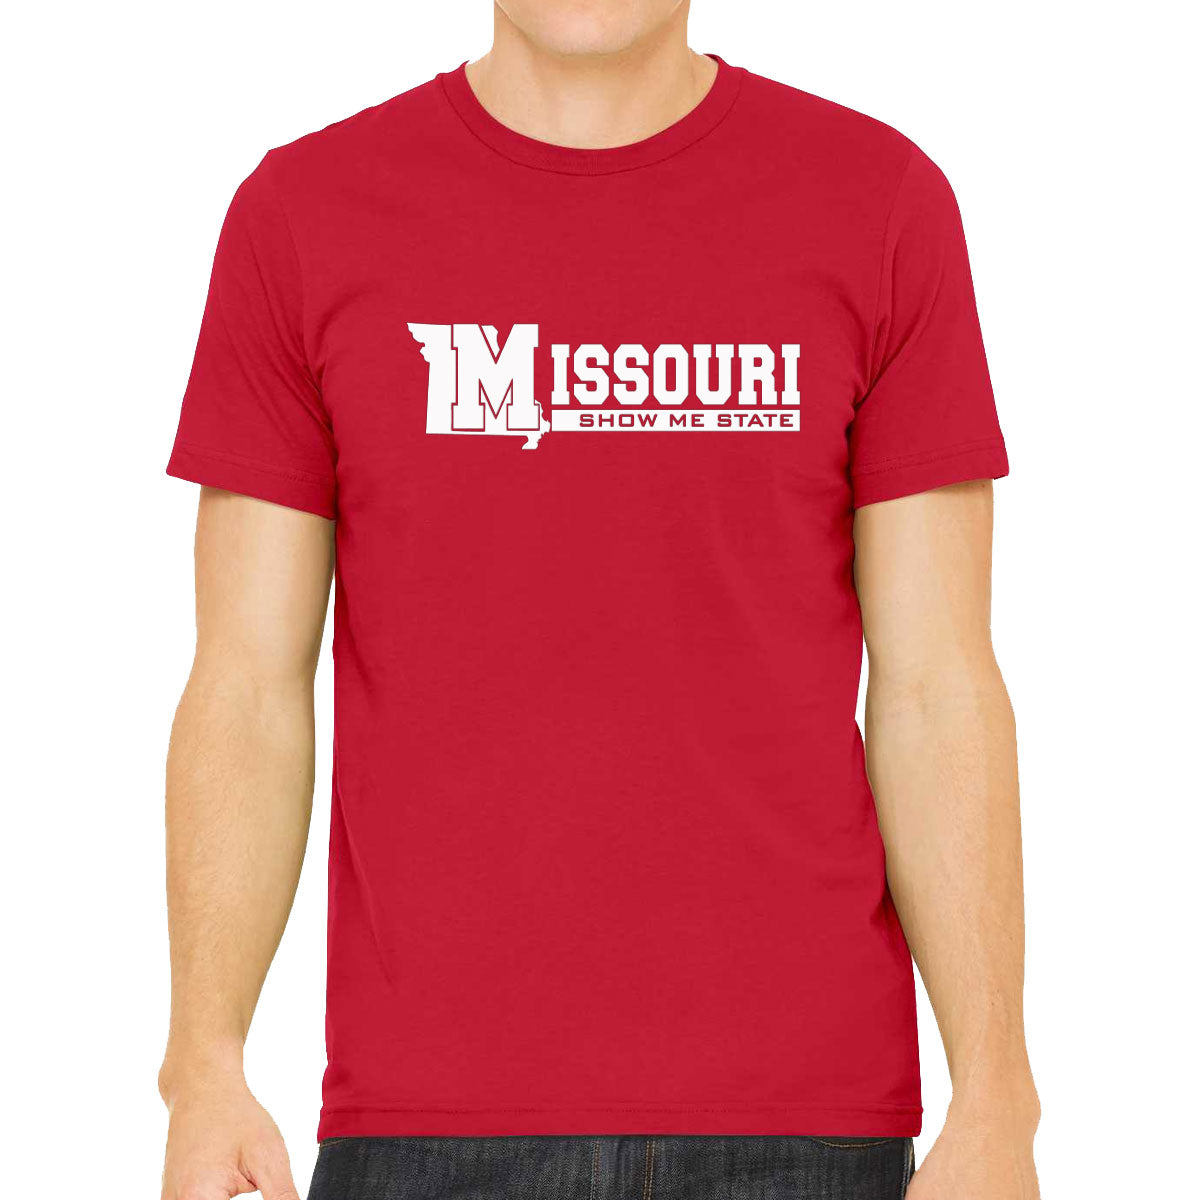 Missouri Show Me State Men's T-shirt